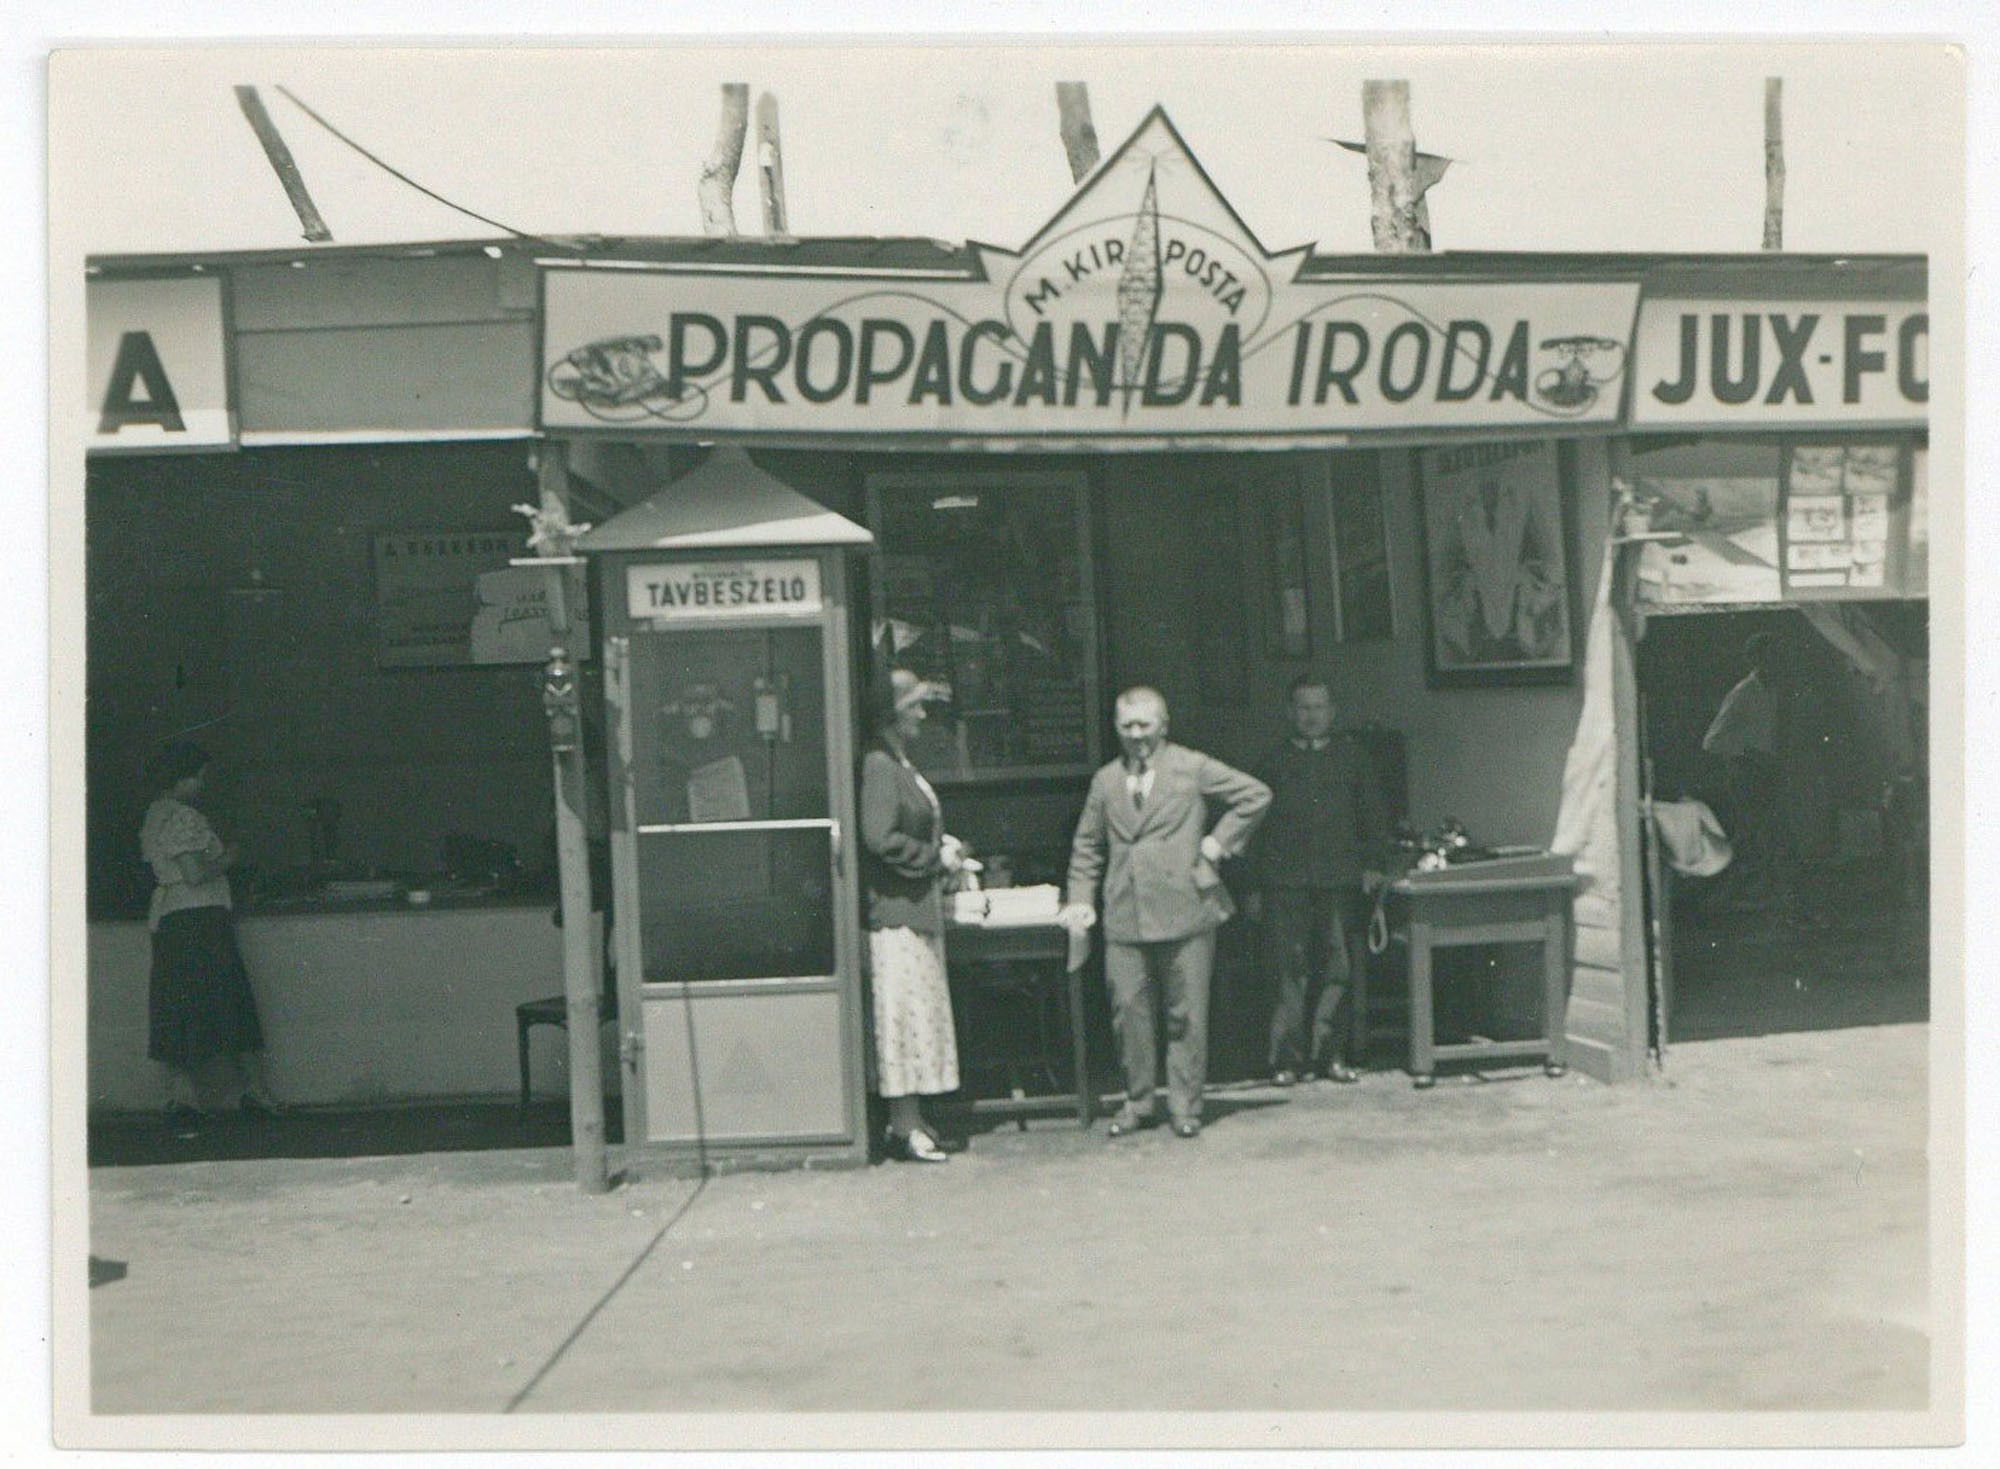 A m. kir. posta propaganda irodája (Postamúzeum CC BY-NC-SA)